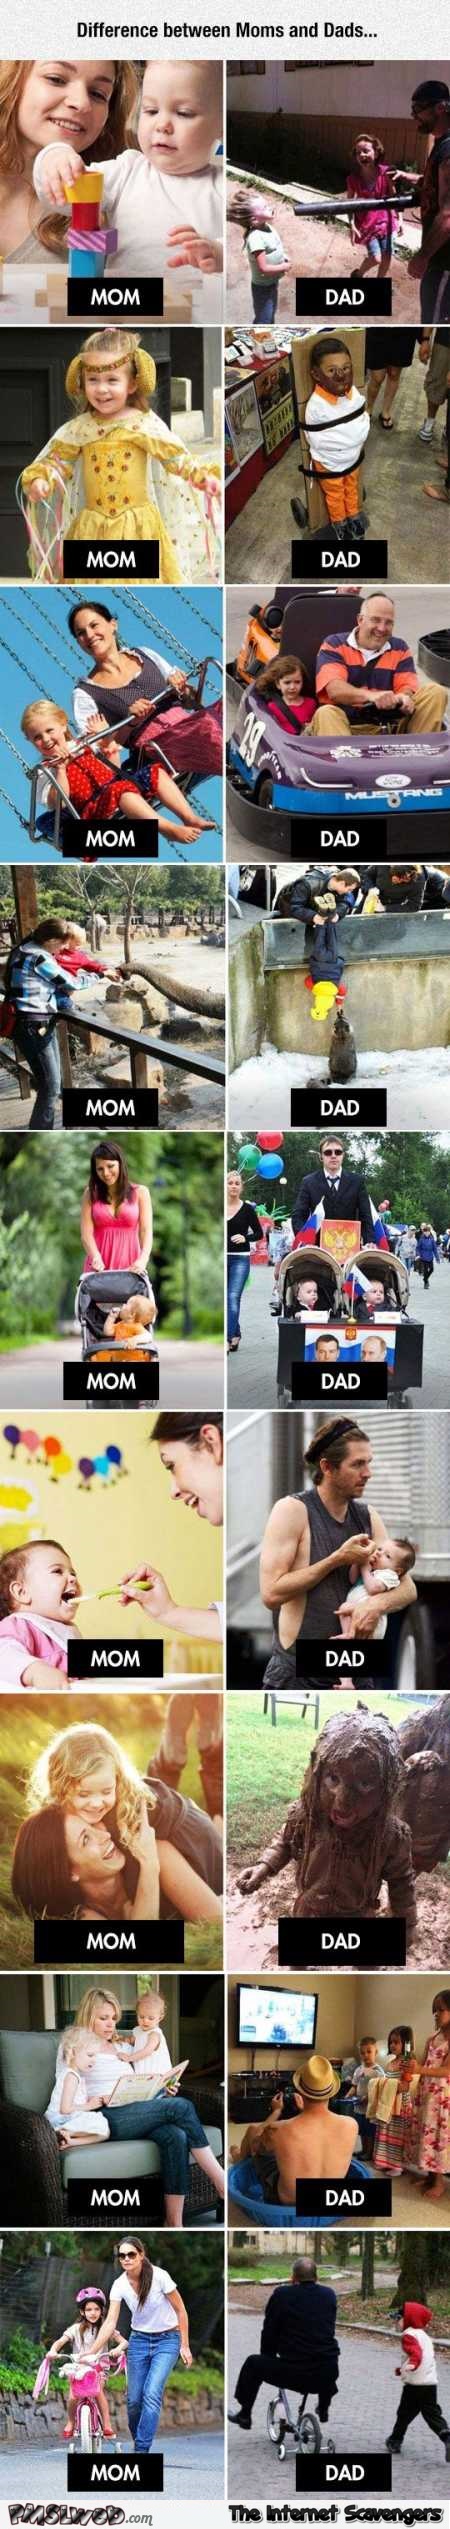 Mom versus dad humor @PMSLweb.com